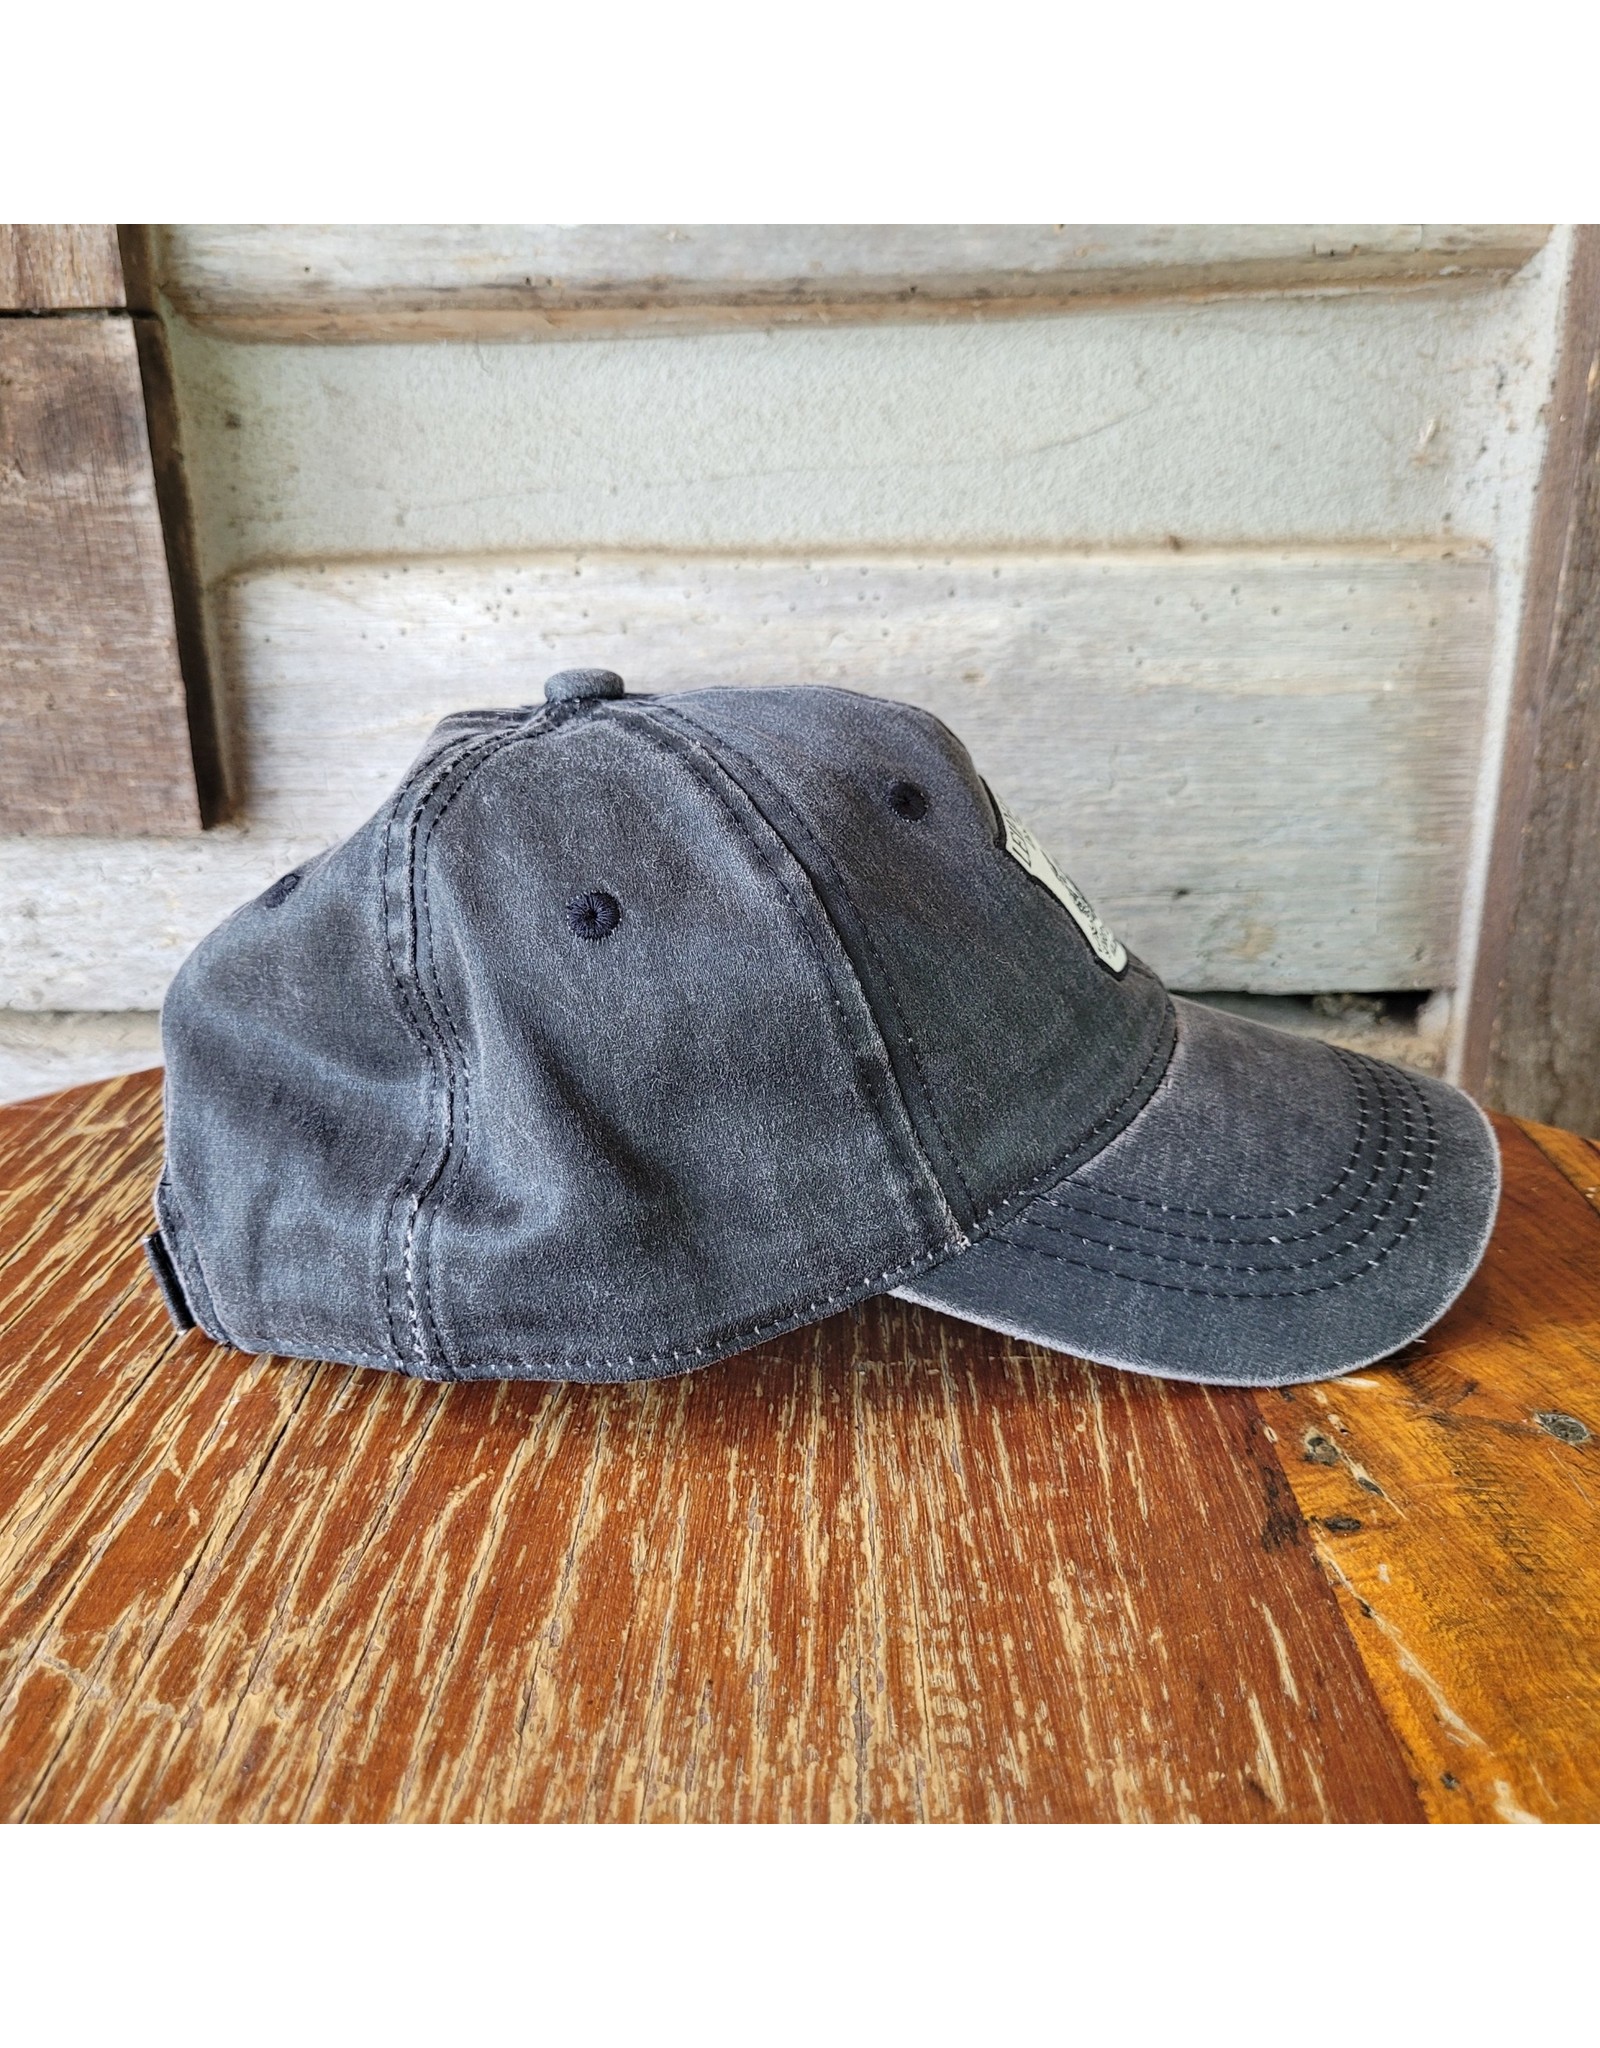 Solid Black Waxed Cap/Hat